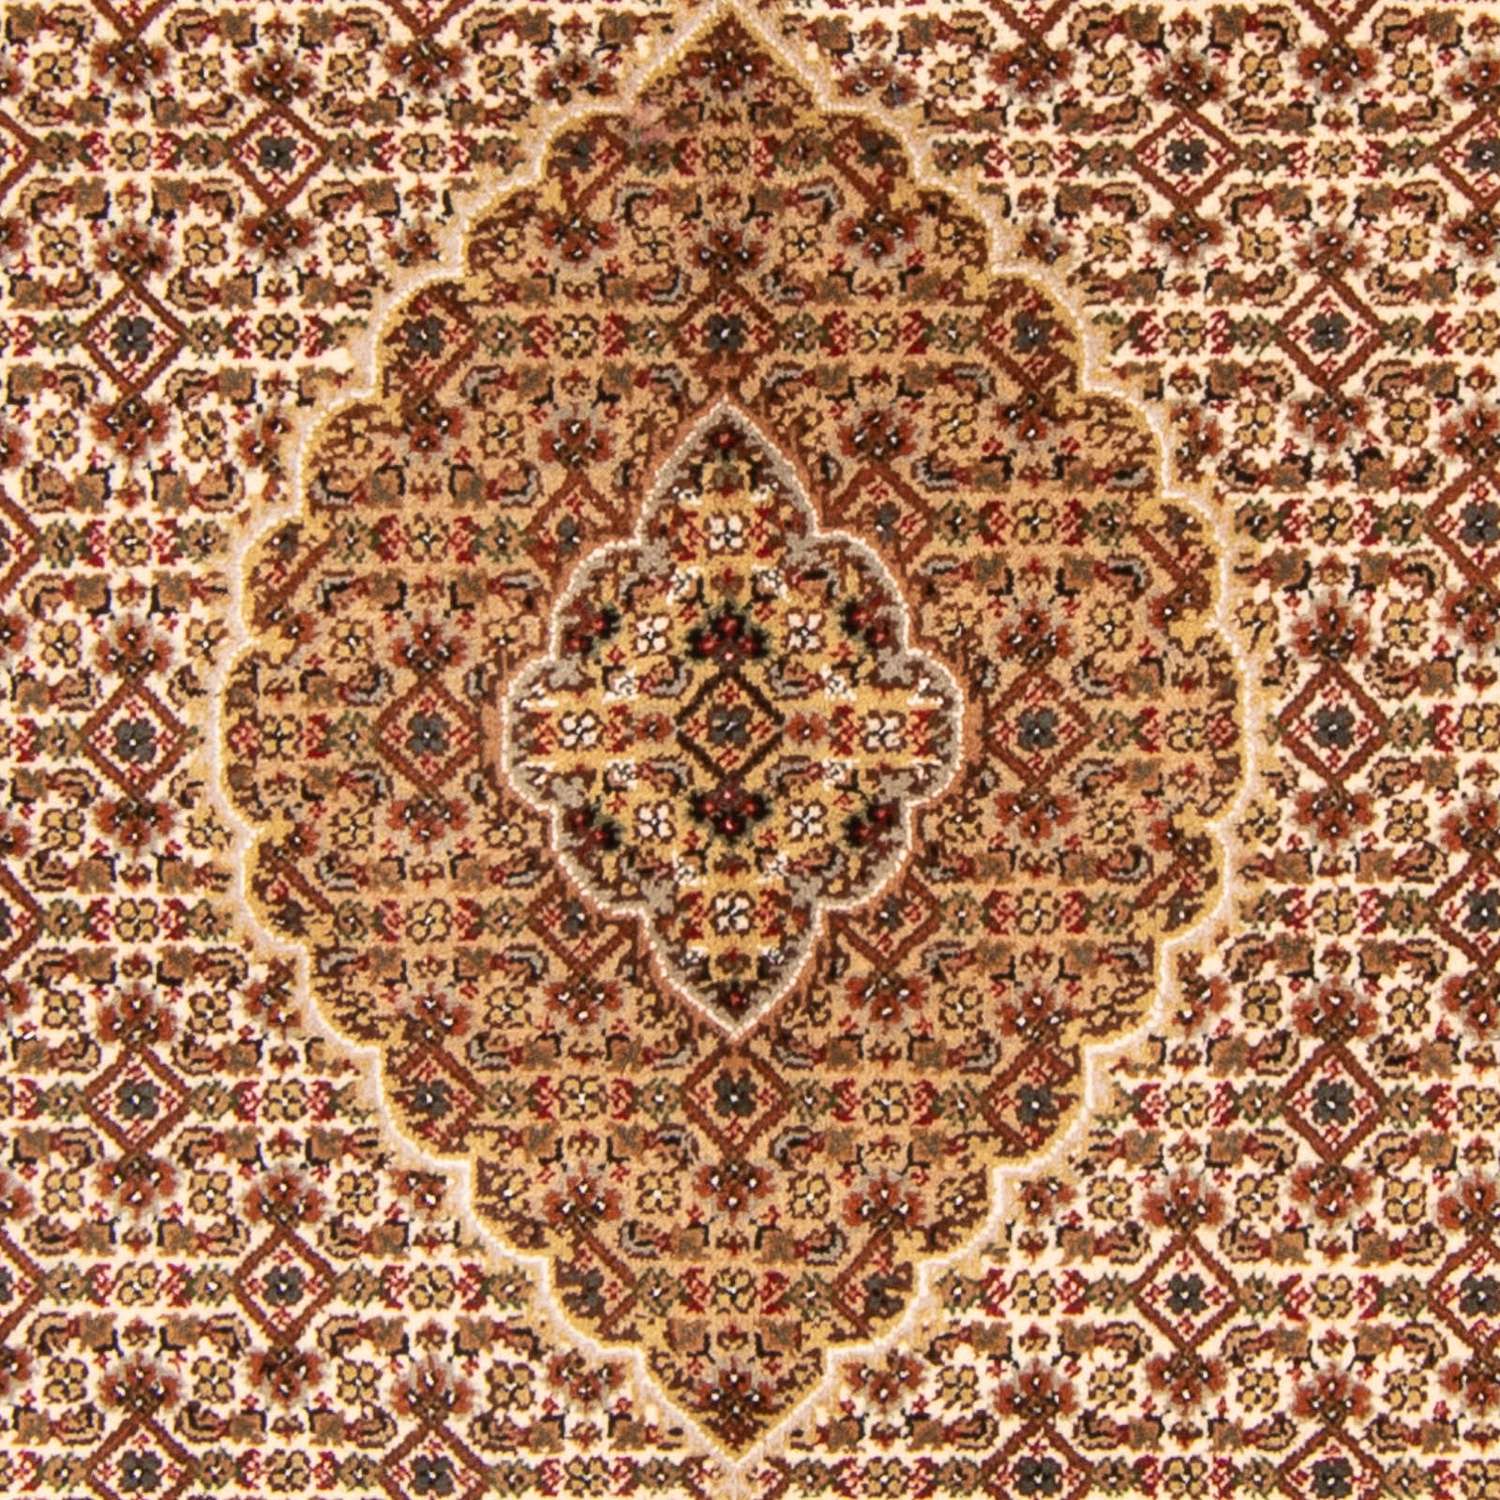 Perský koberec - Tabríz - 193 x 123 cm - béžová